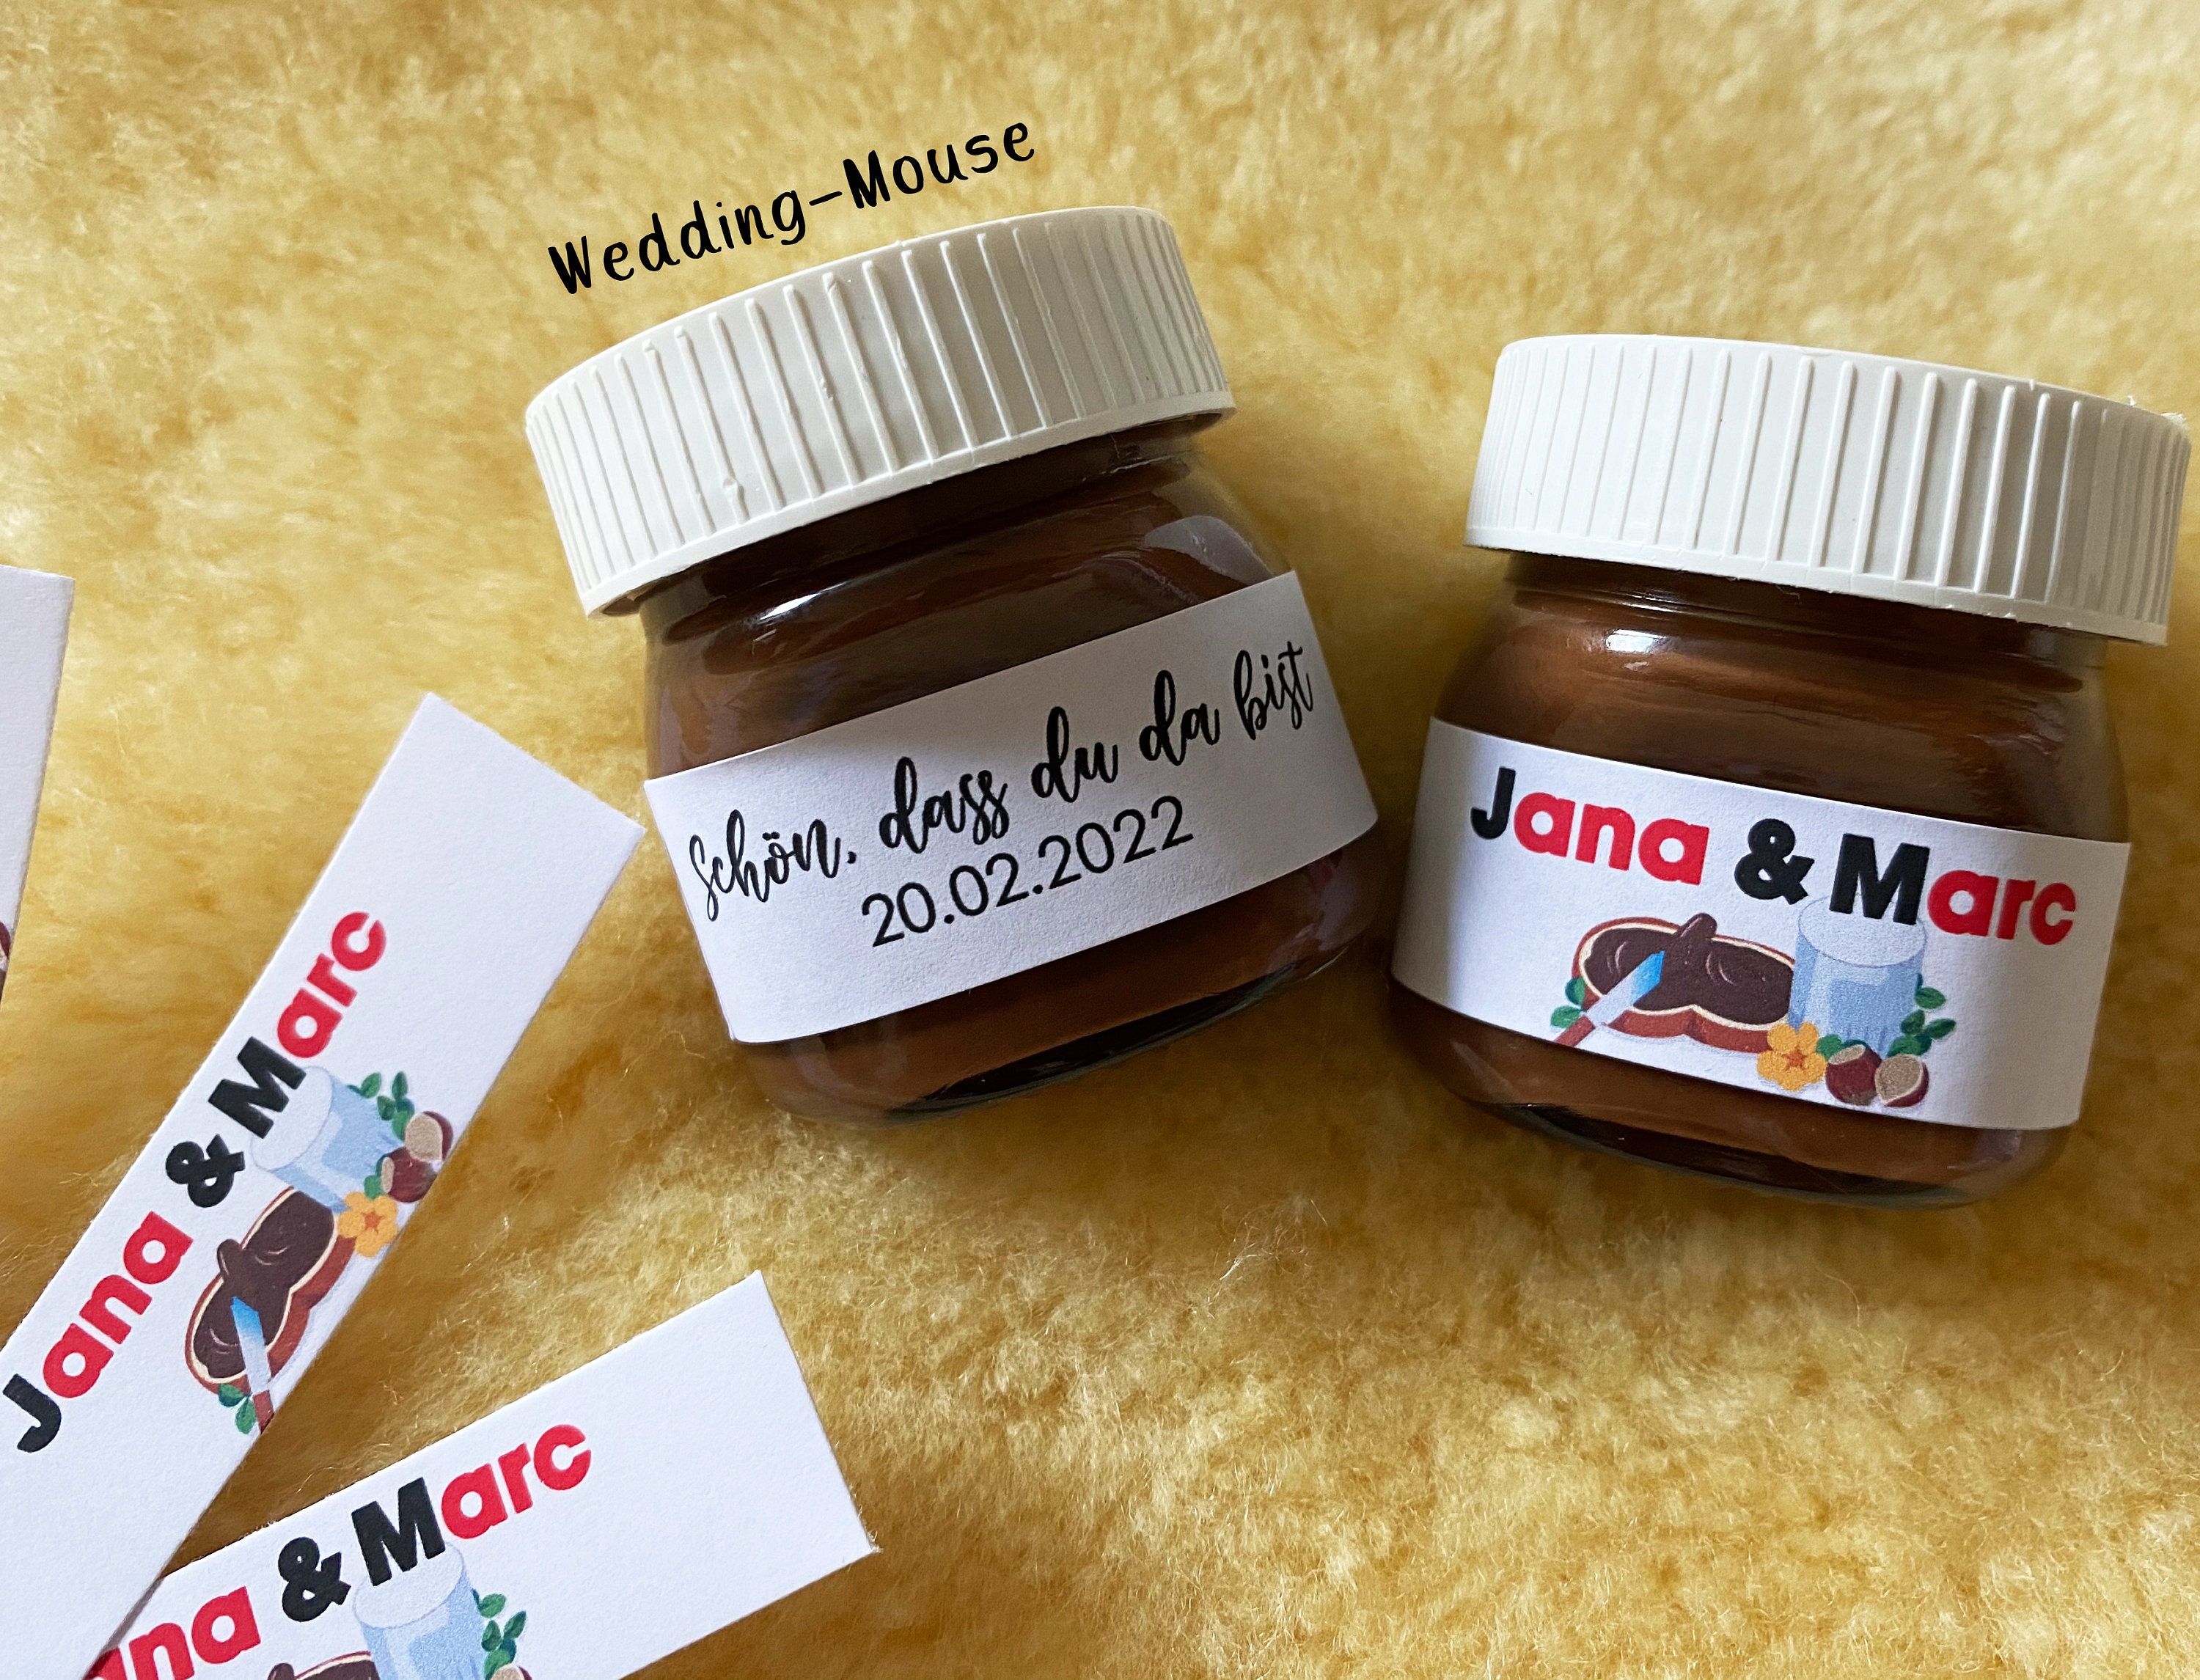 25x Nutella Mini etiquetas para 25g regalo boda Vintage regalo boda favor  regalo personalizado -  España